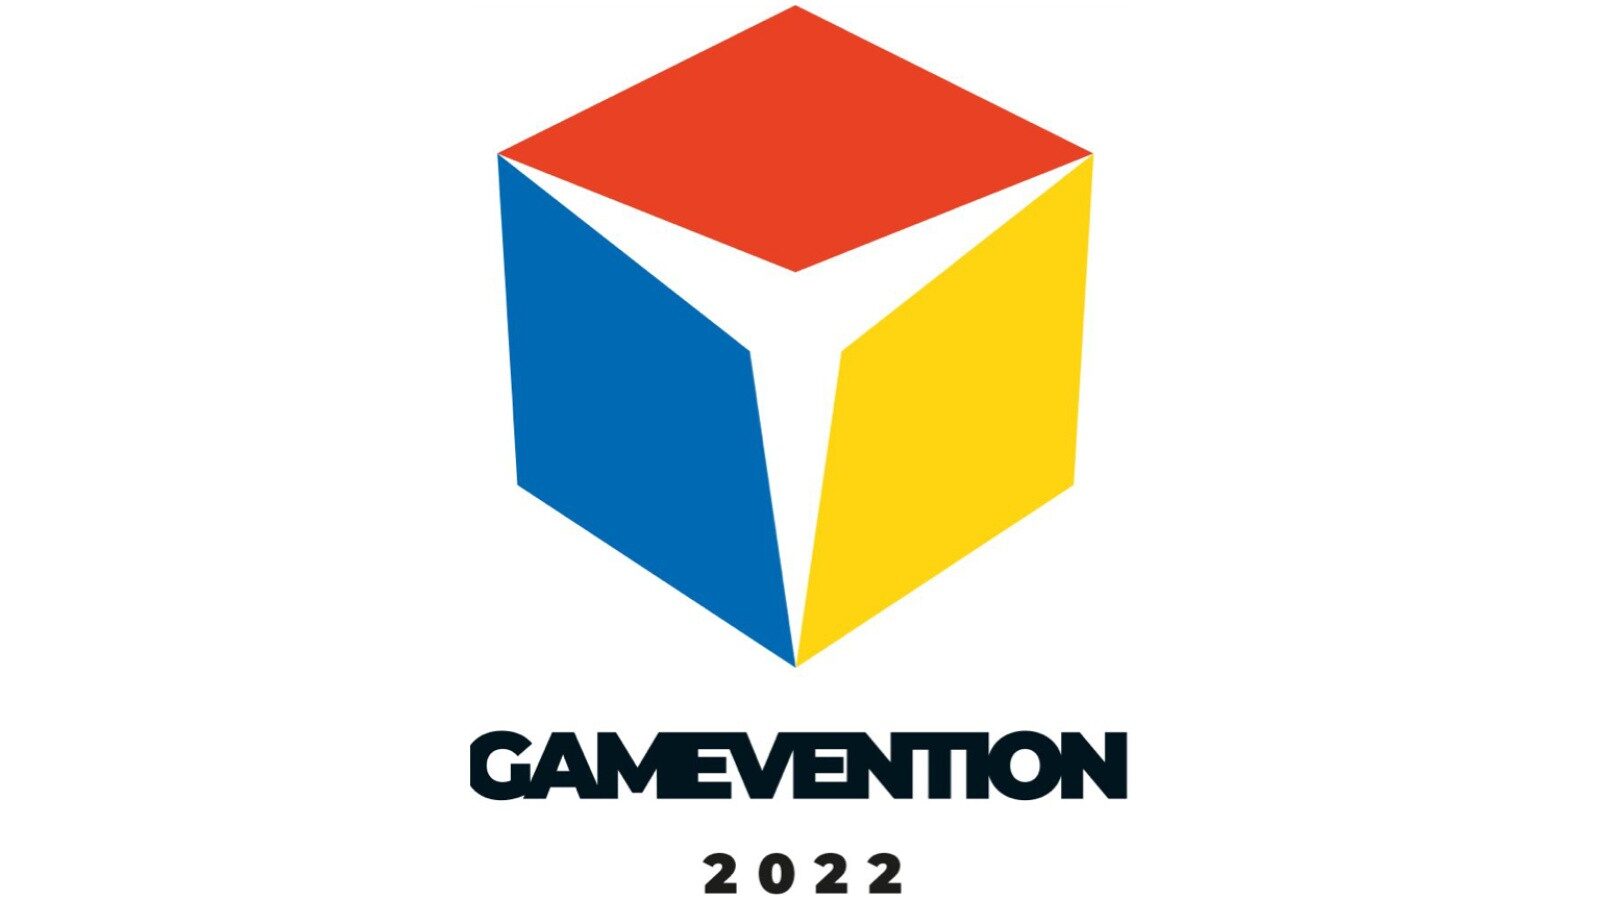 GAMEVENTION 2022 (01.07.-03.07.)